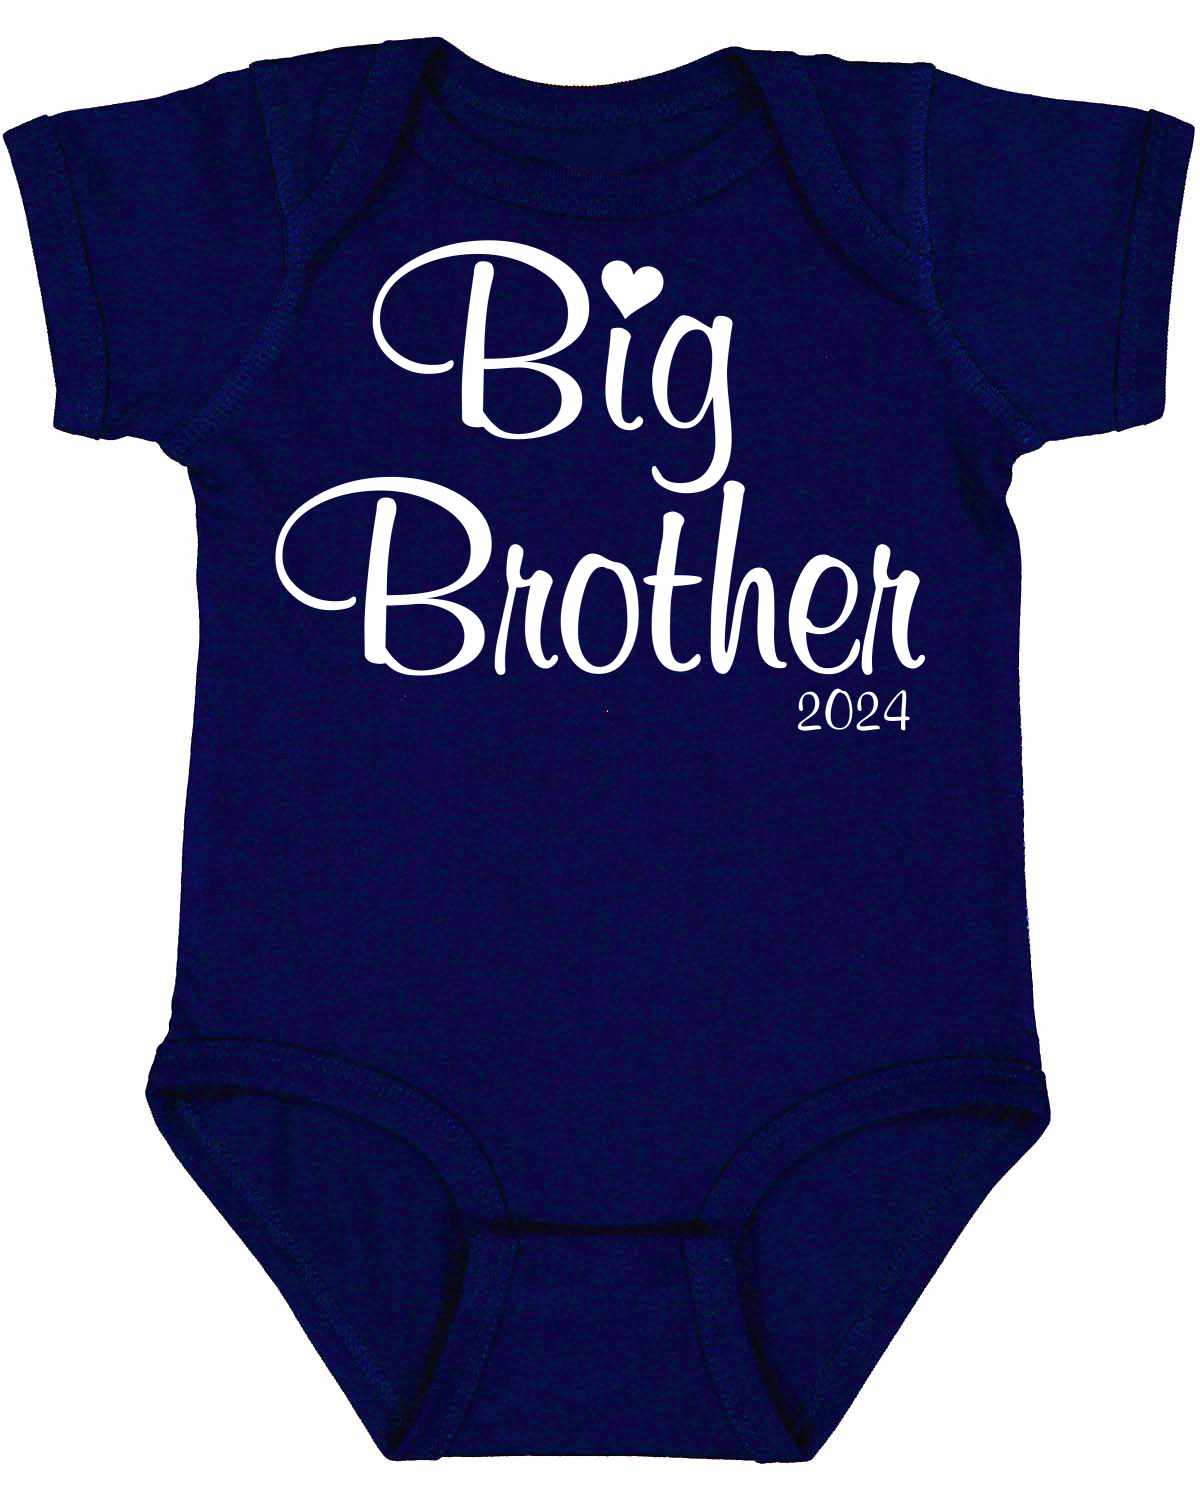 Big Brother 2024 on Infant BodySuit